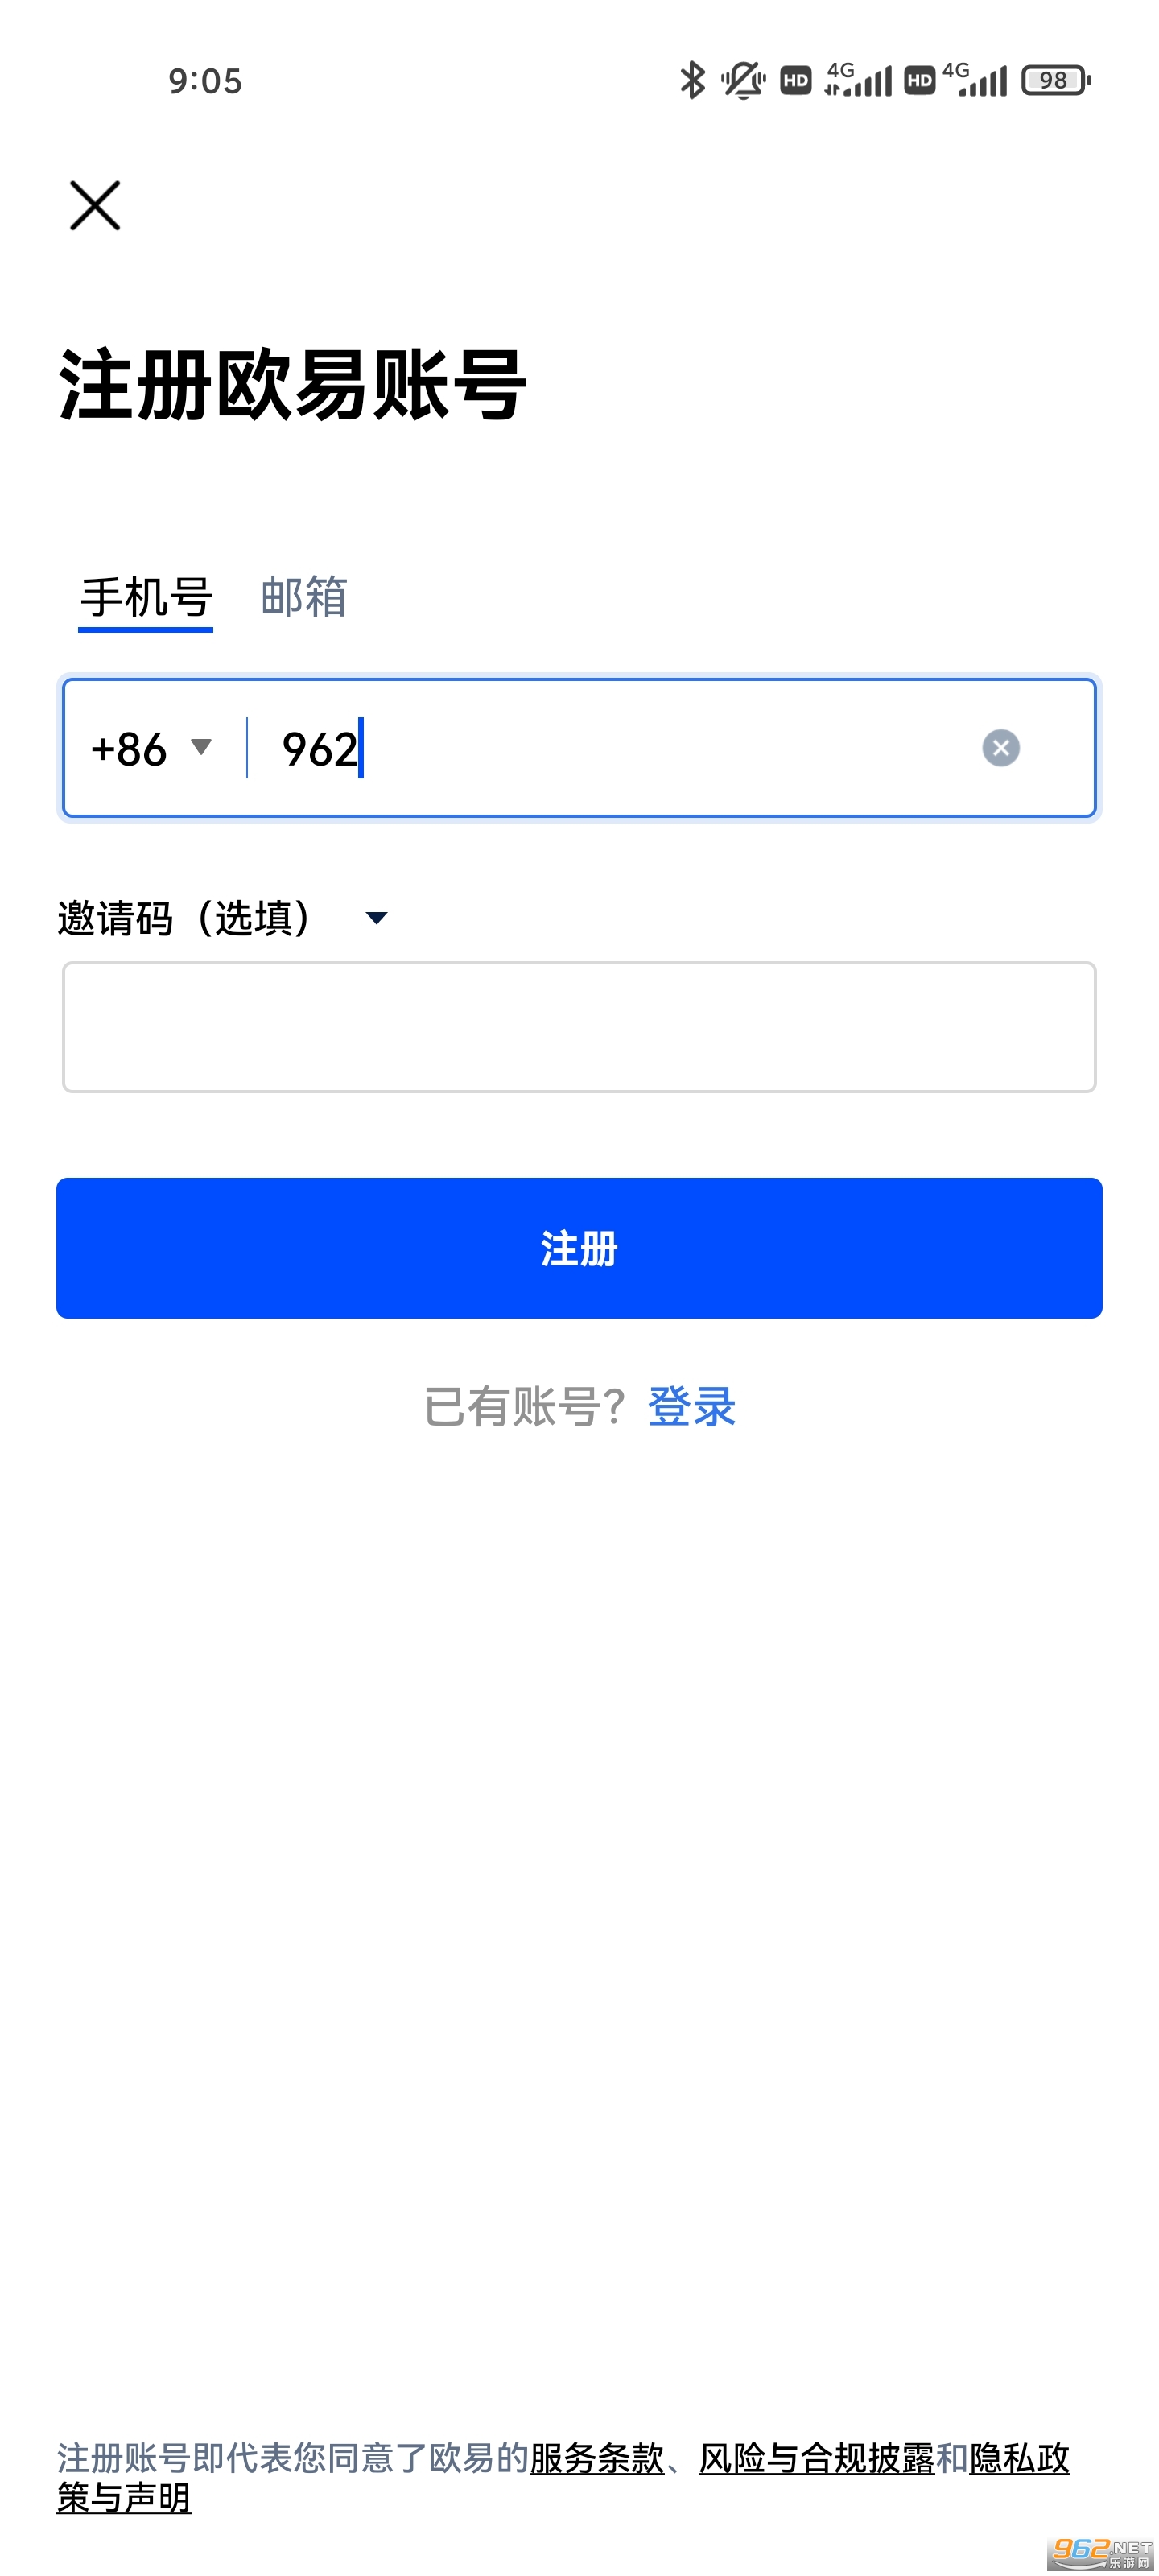 okex欧易官方app 最新版本v6.0.22